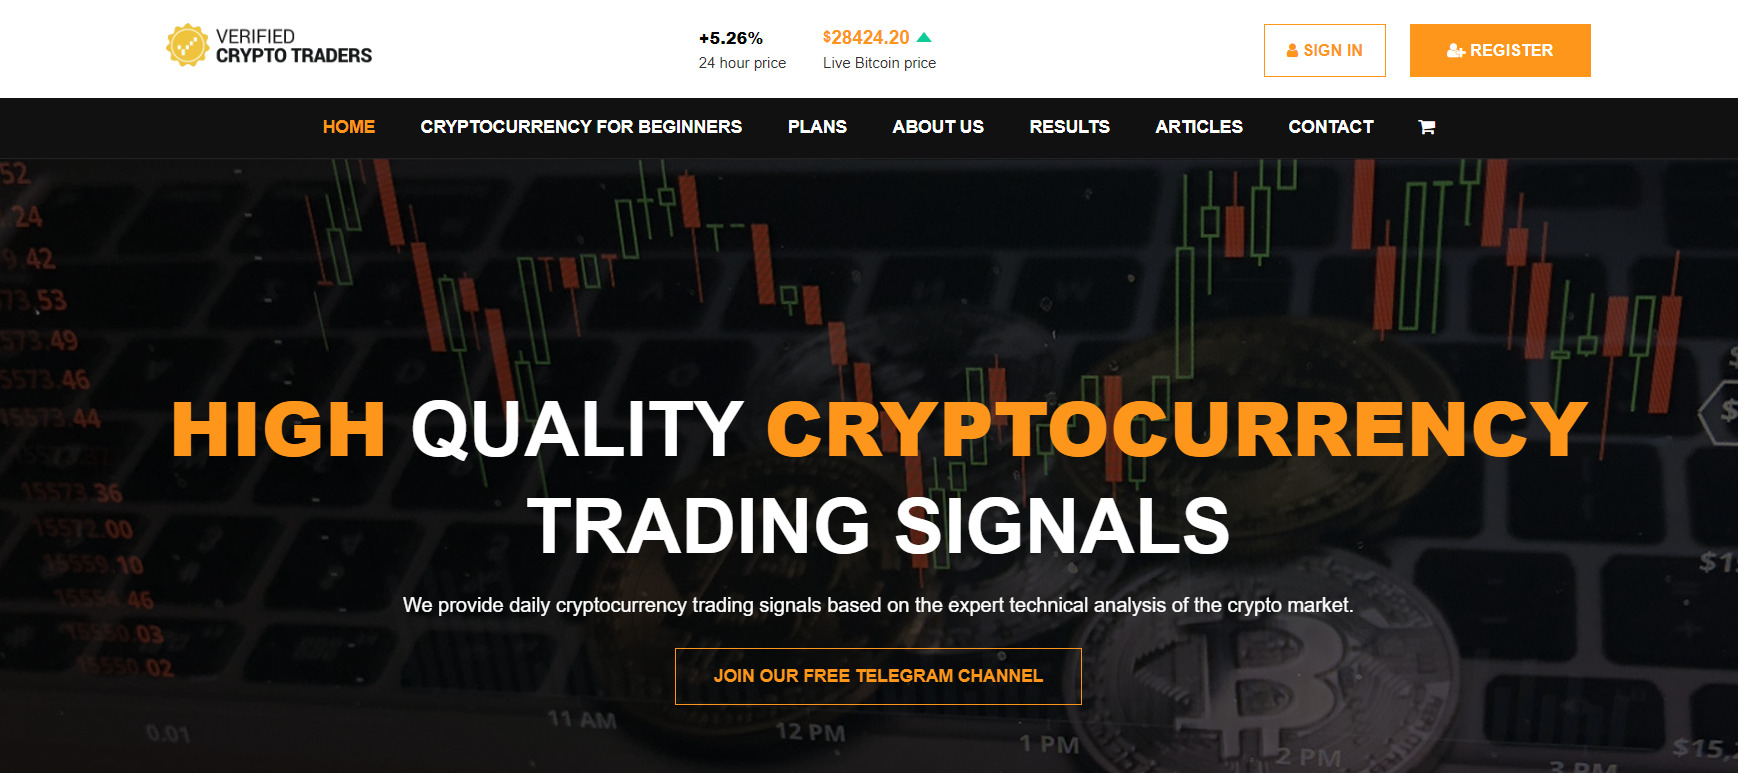 Verified Crypto Traders Website